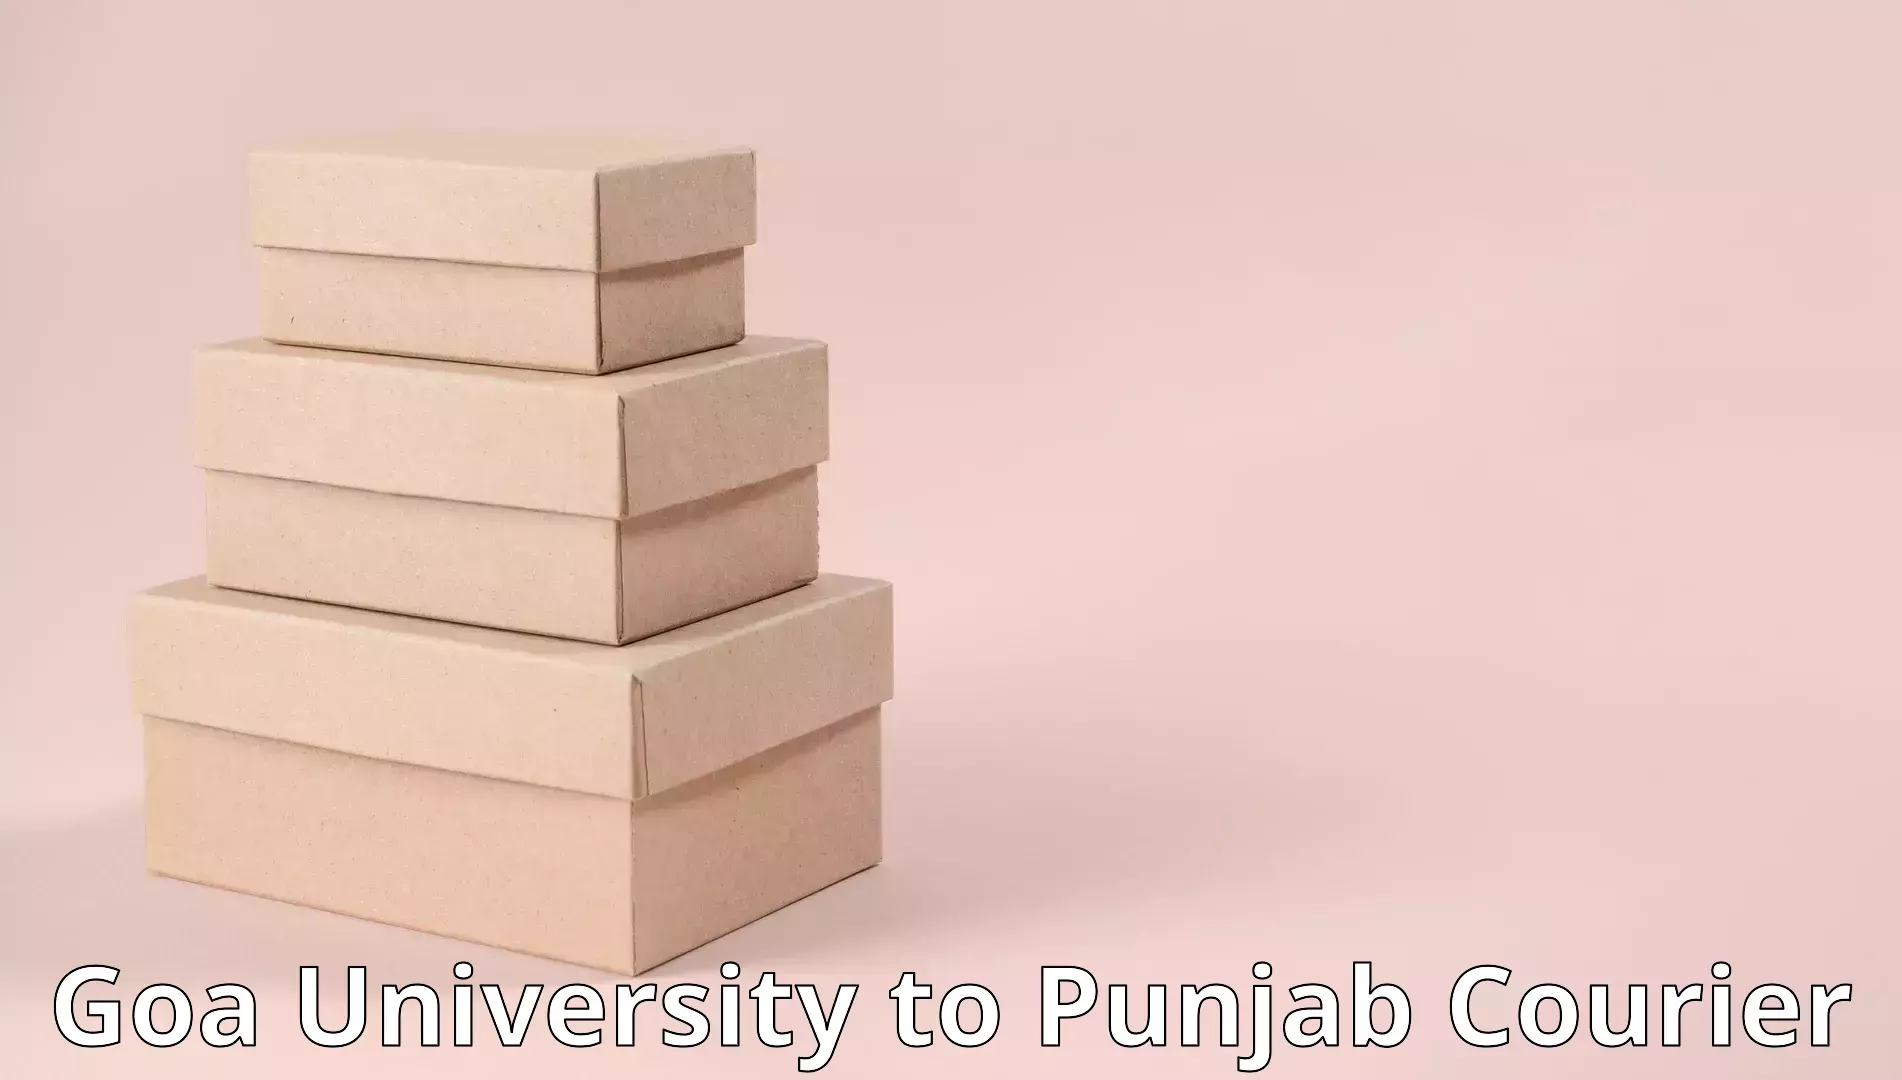 Home goods moving company Goa University to Punjab